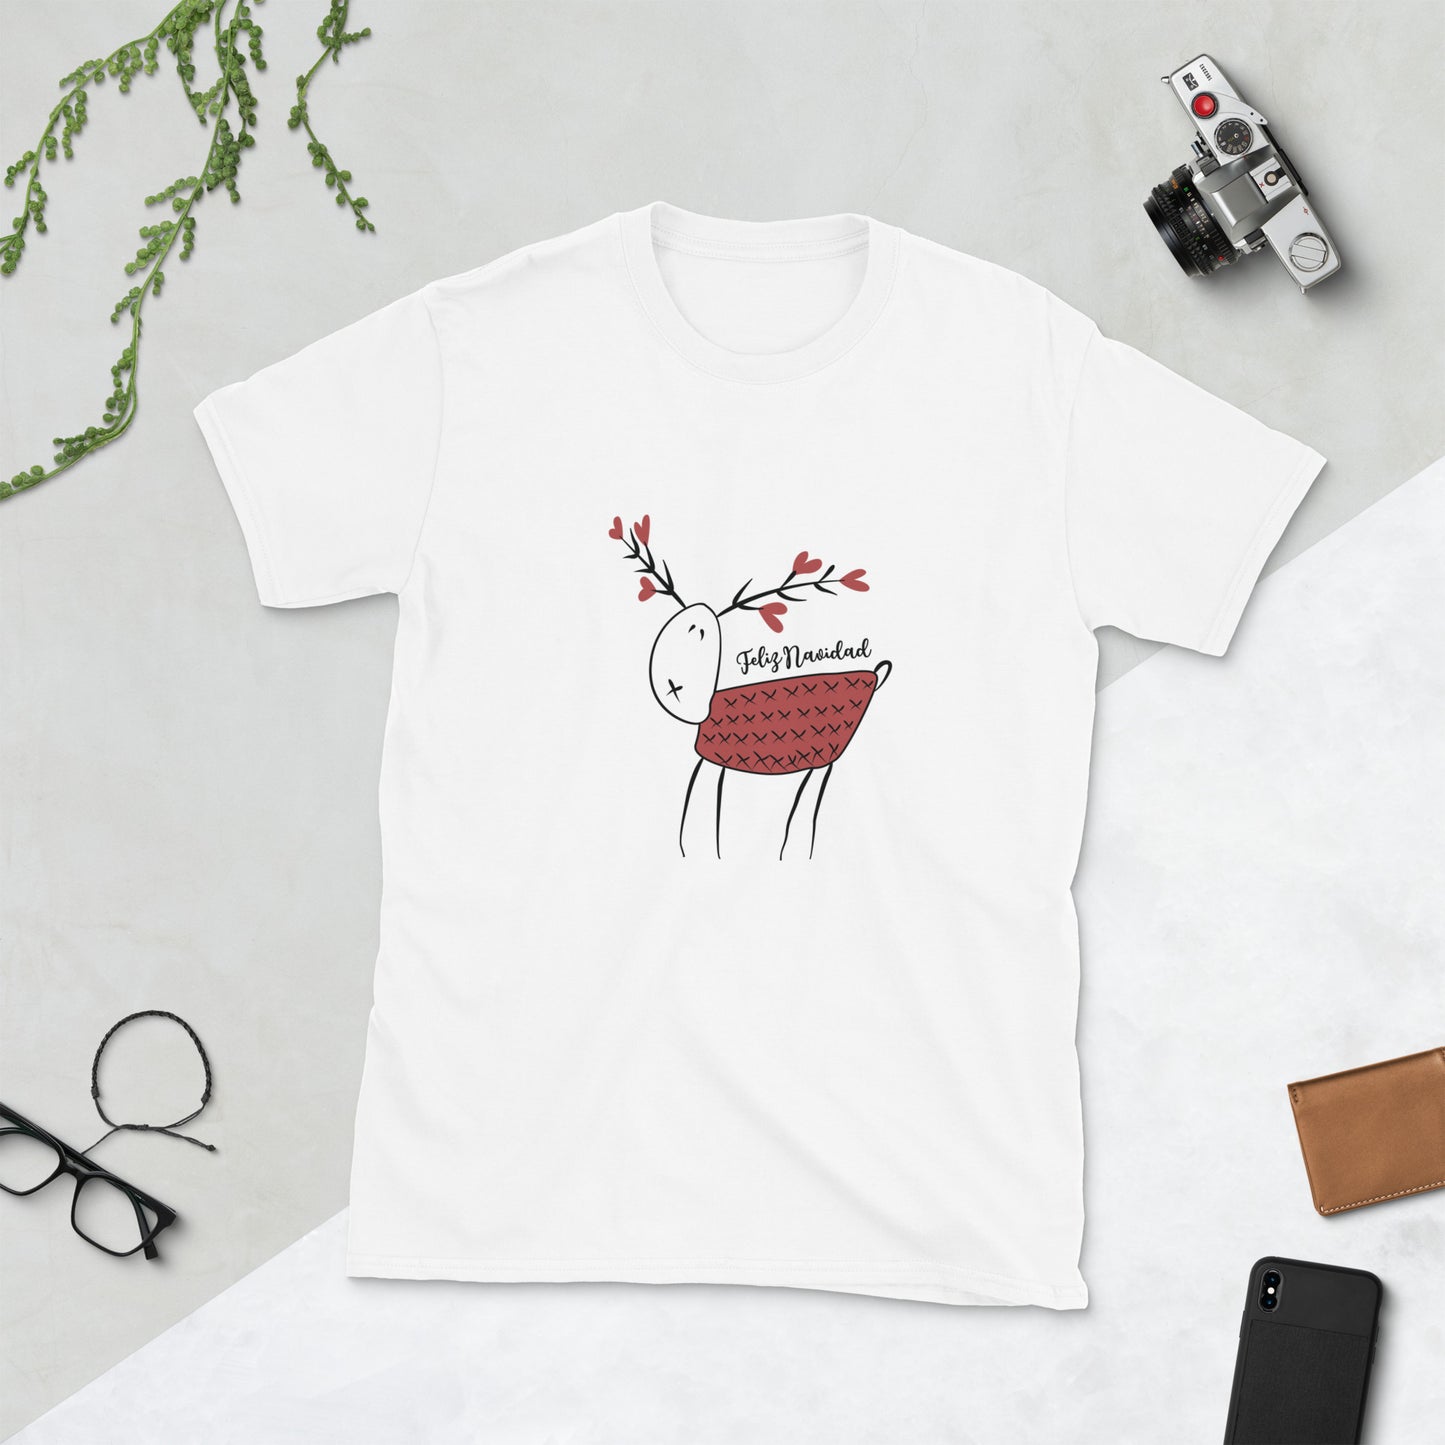 Reindeer Christmas T-shirt